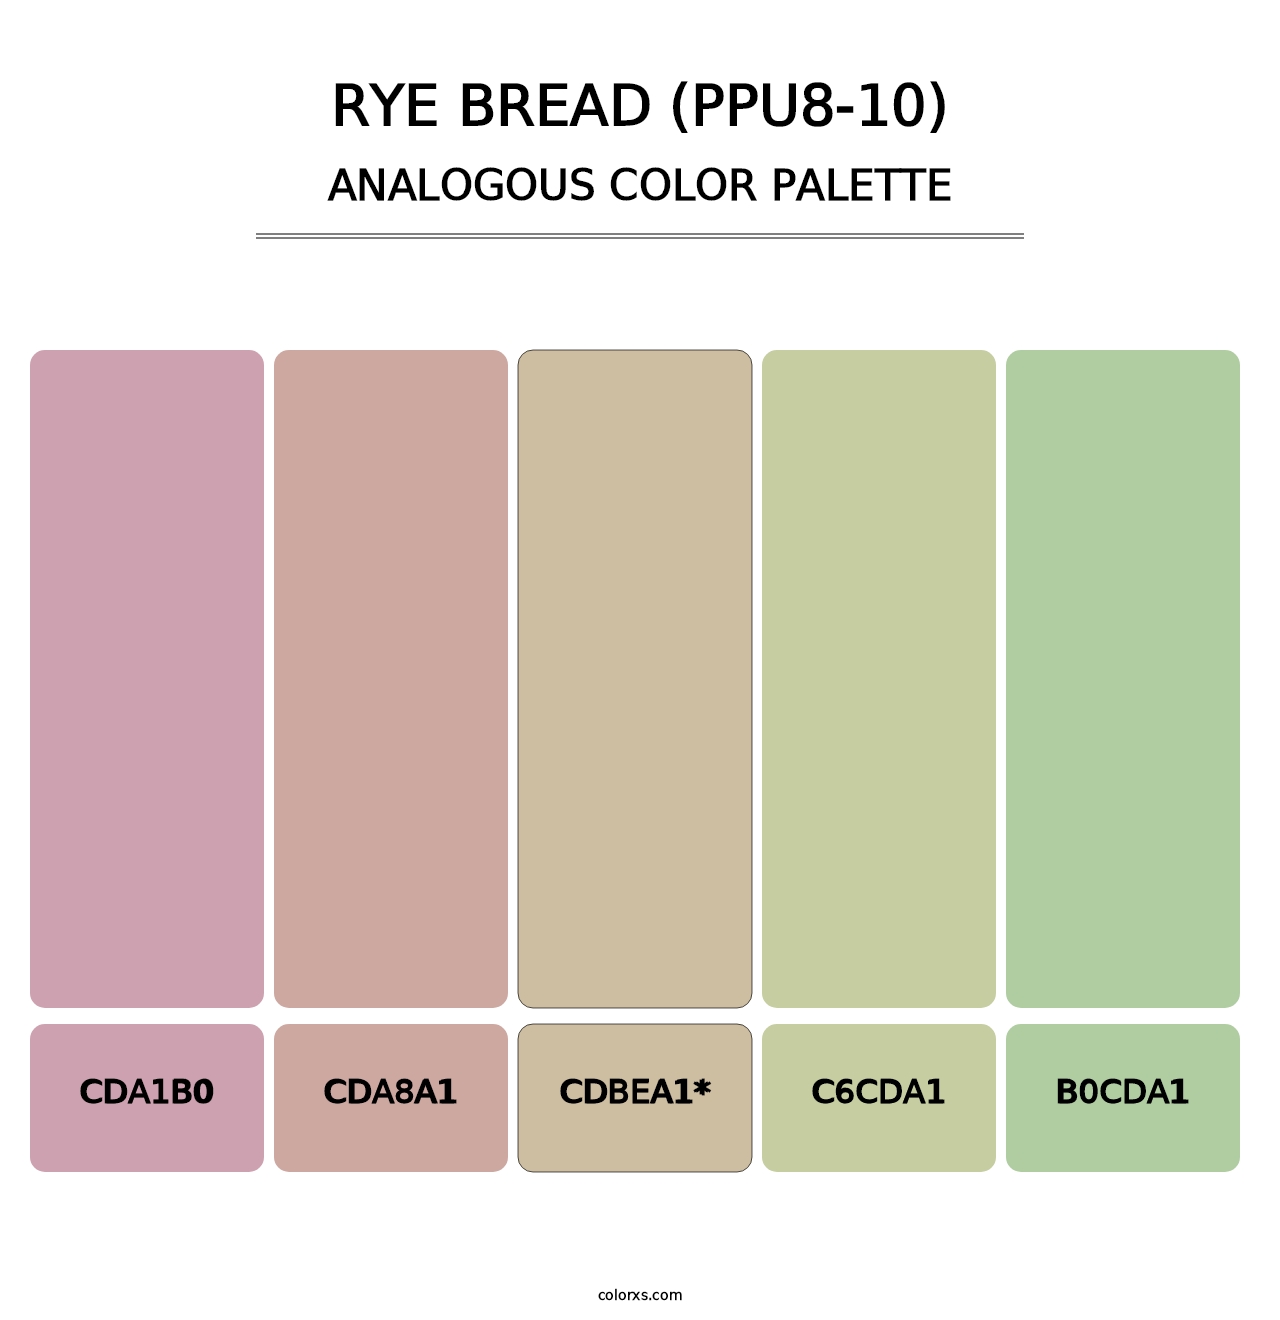 Rye Bread (PPU8-10) - Analogous Color Palette